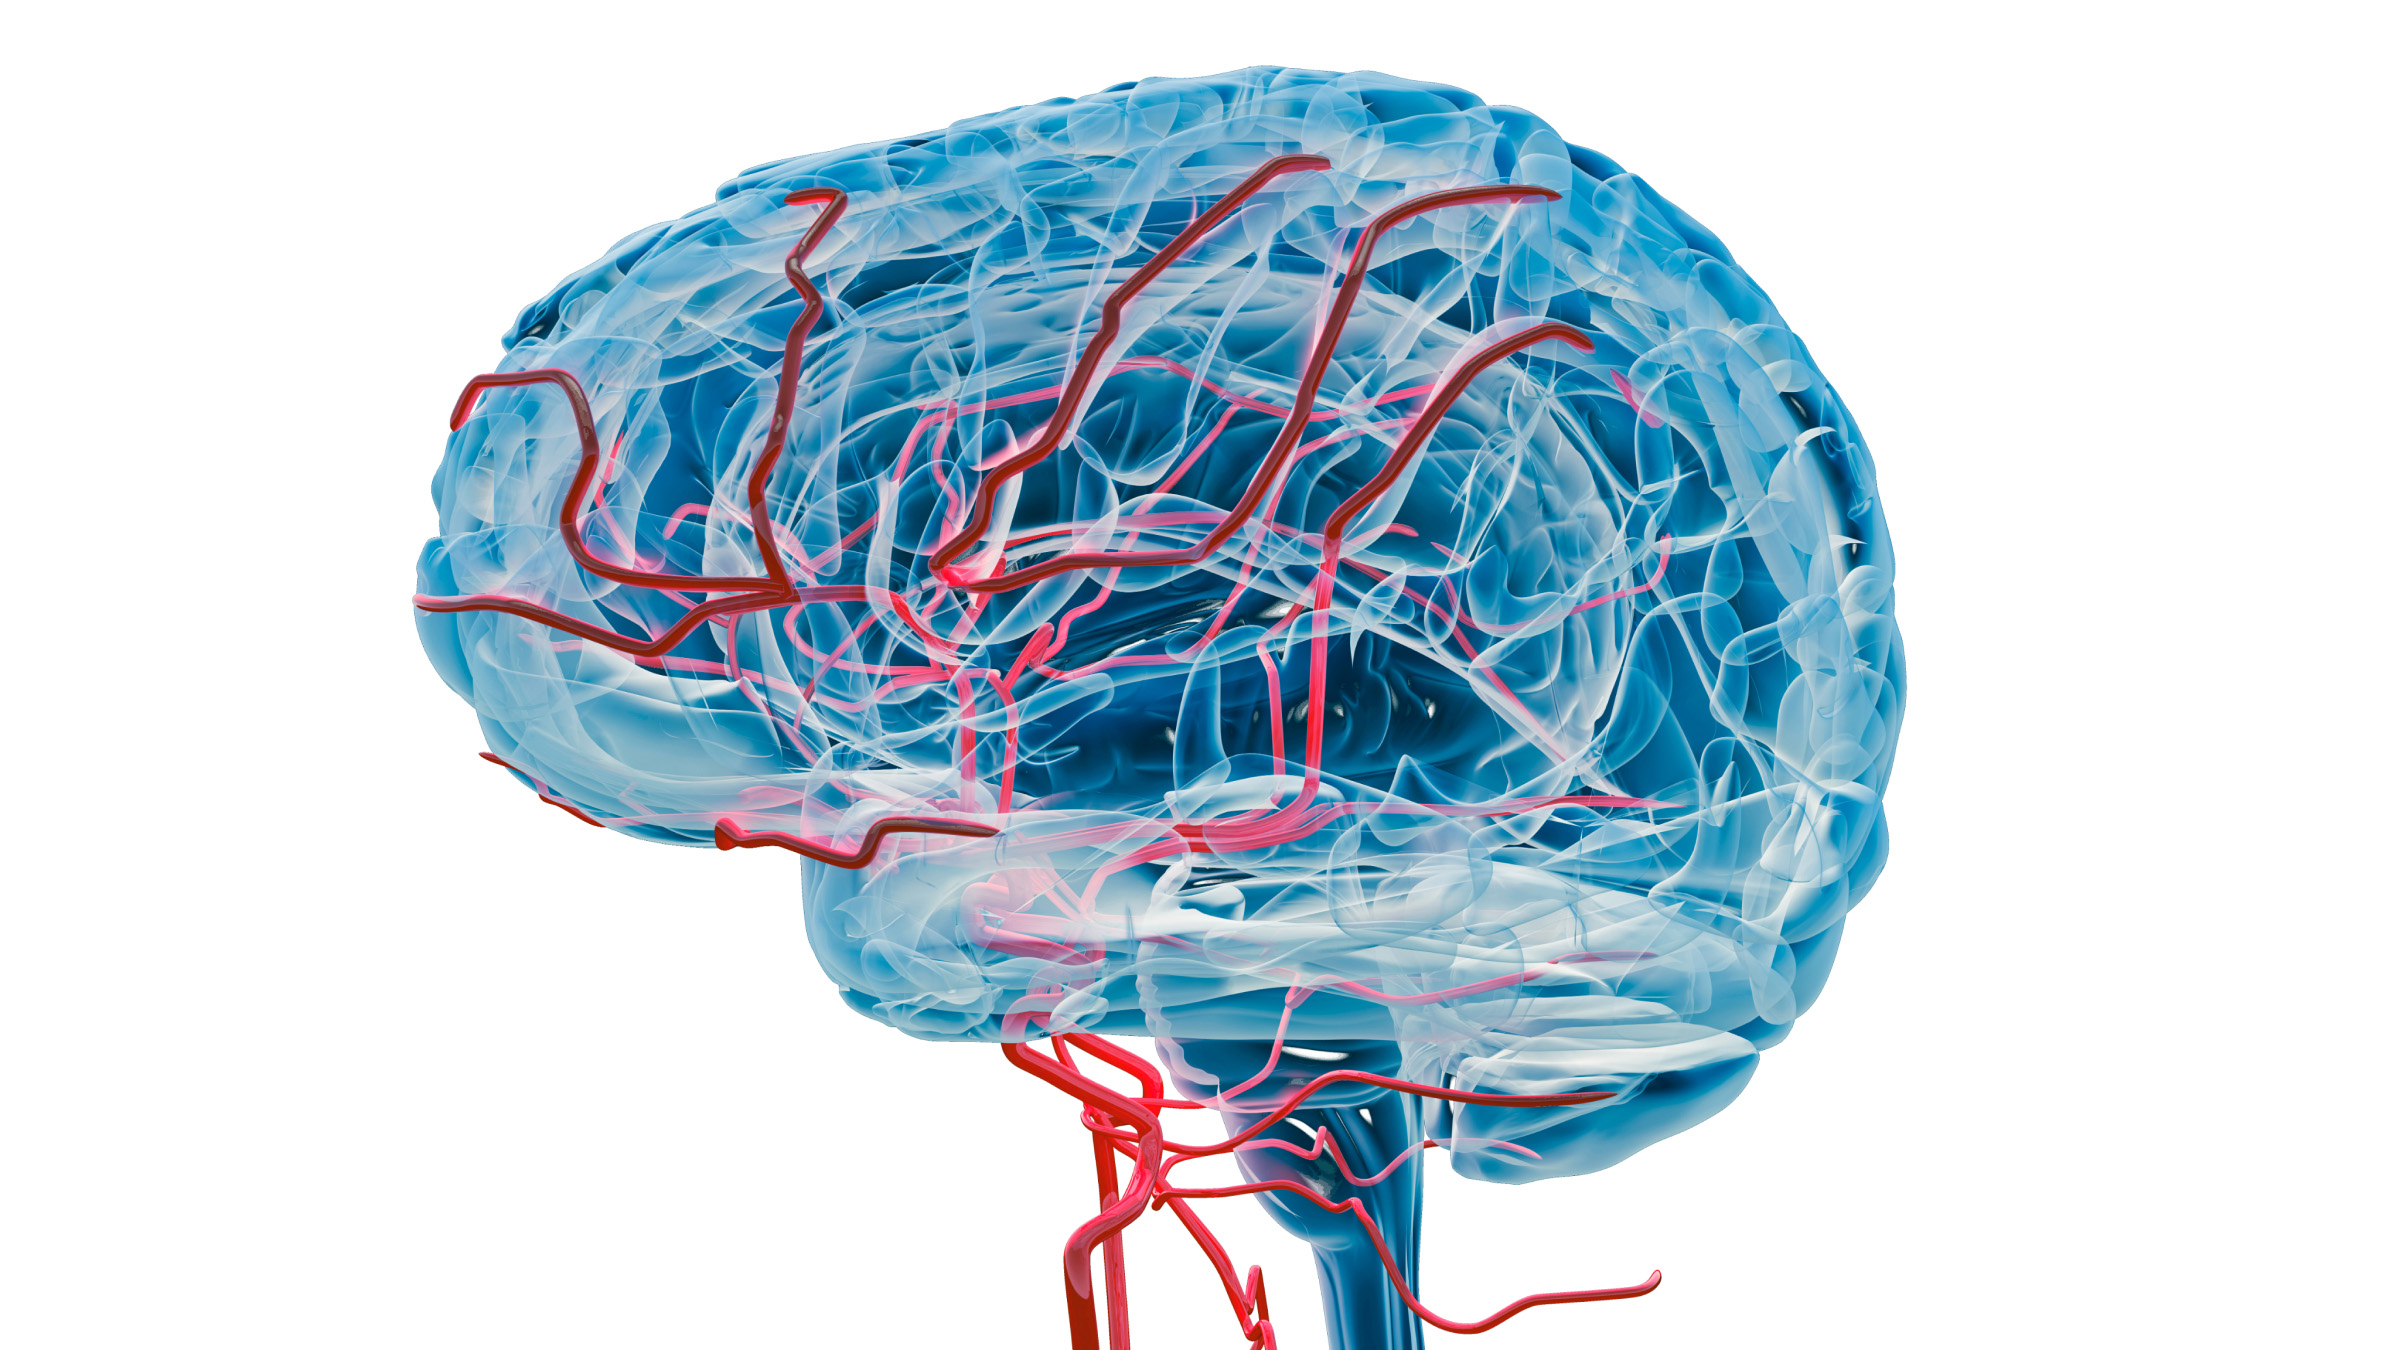 X-ray image of brain circulatory system